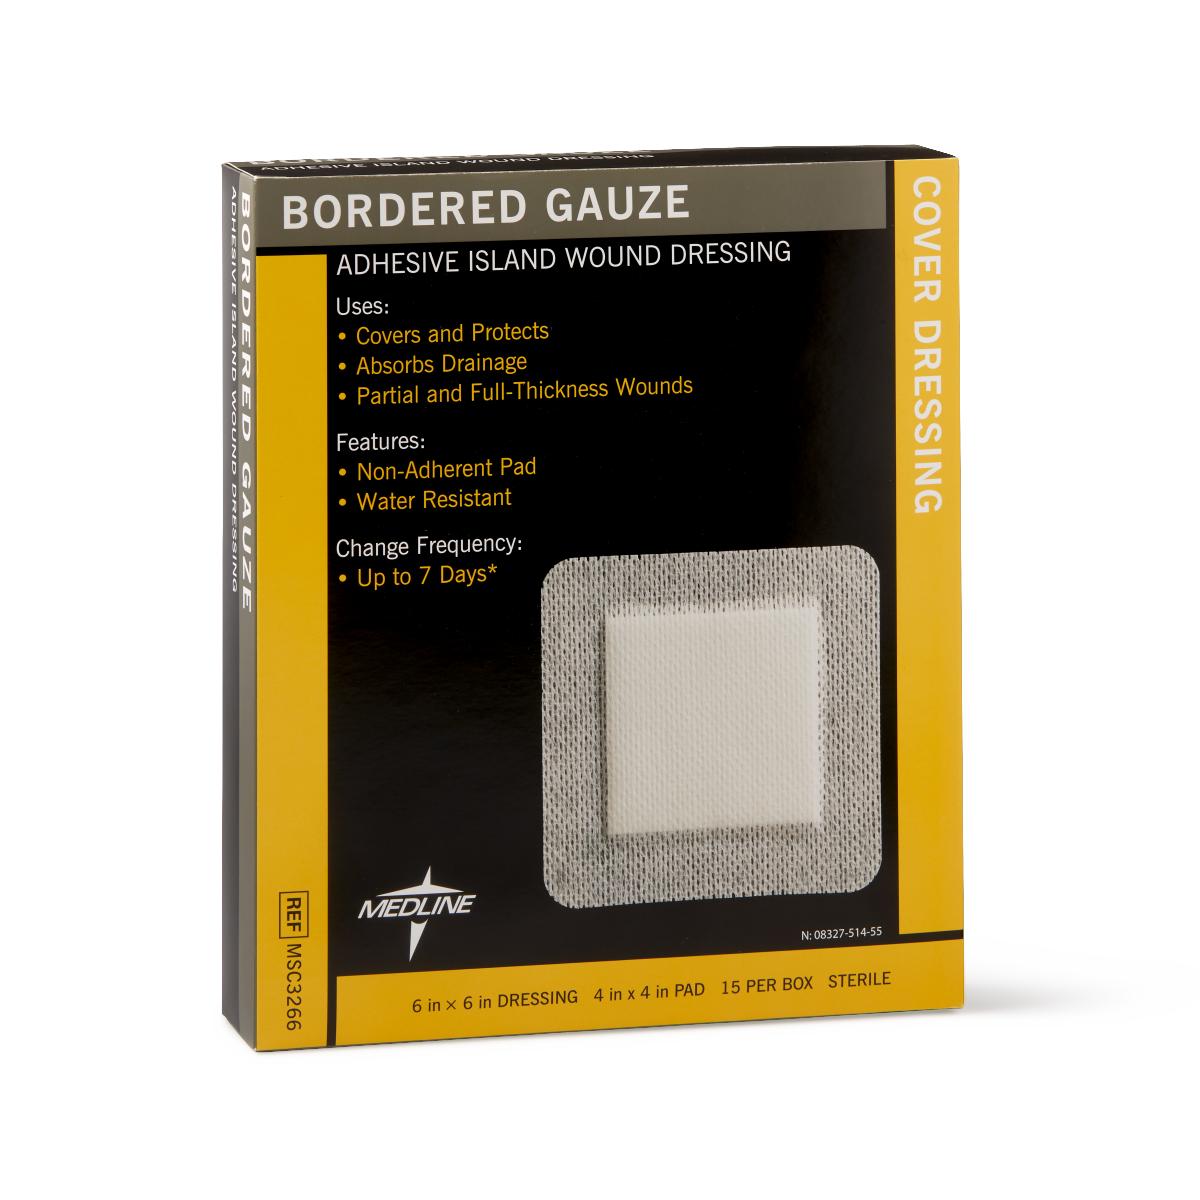 Sterile Bordered Gauze Adhesive Island Wound Dressing- Various sizes (box of 15)